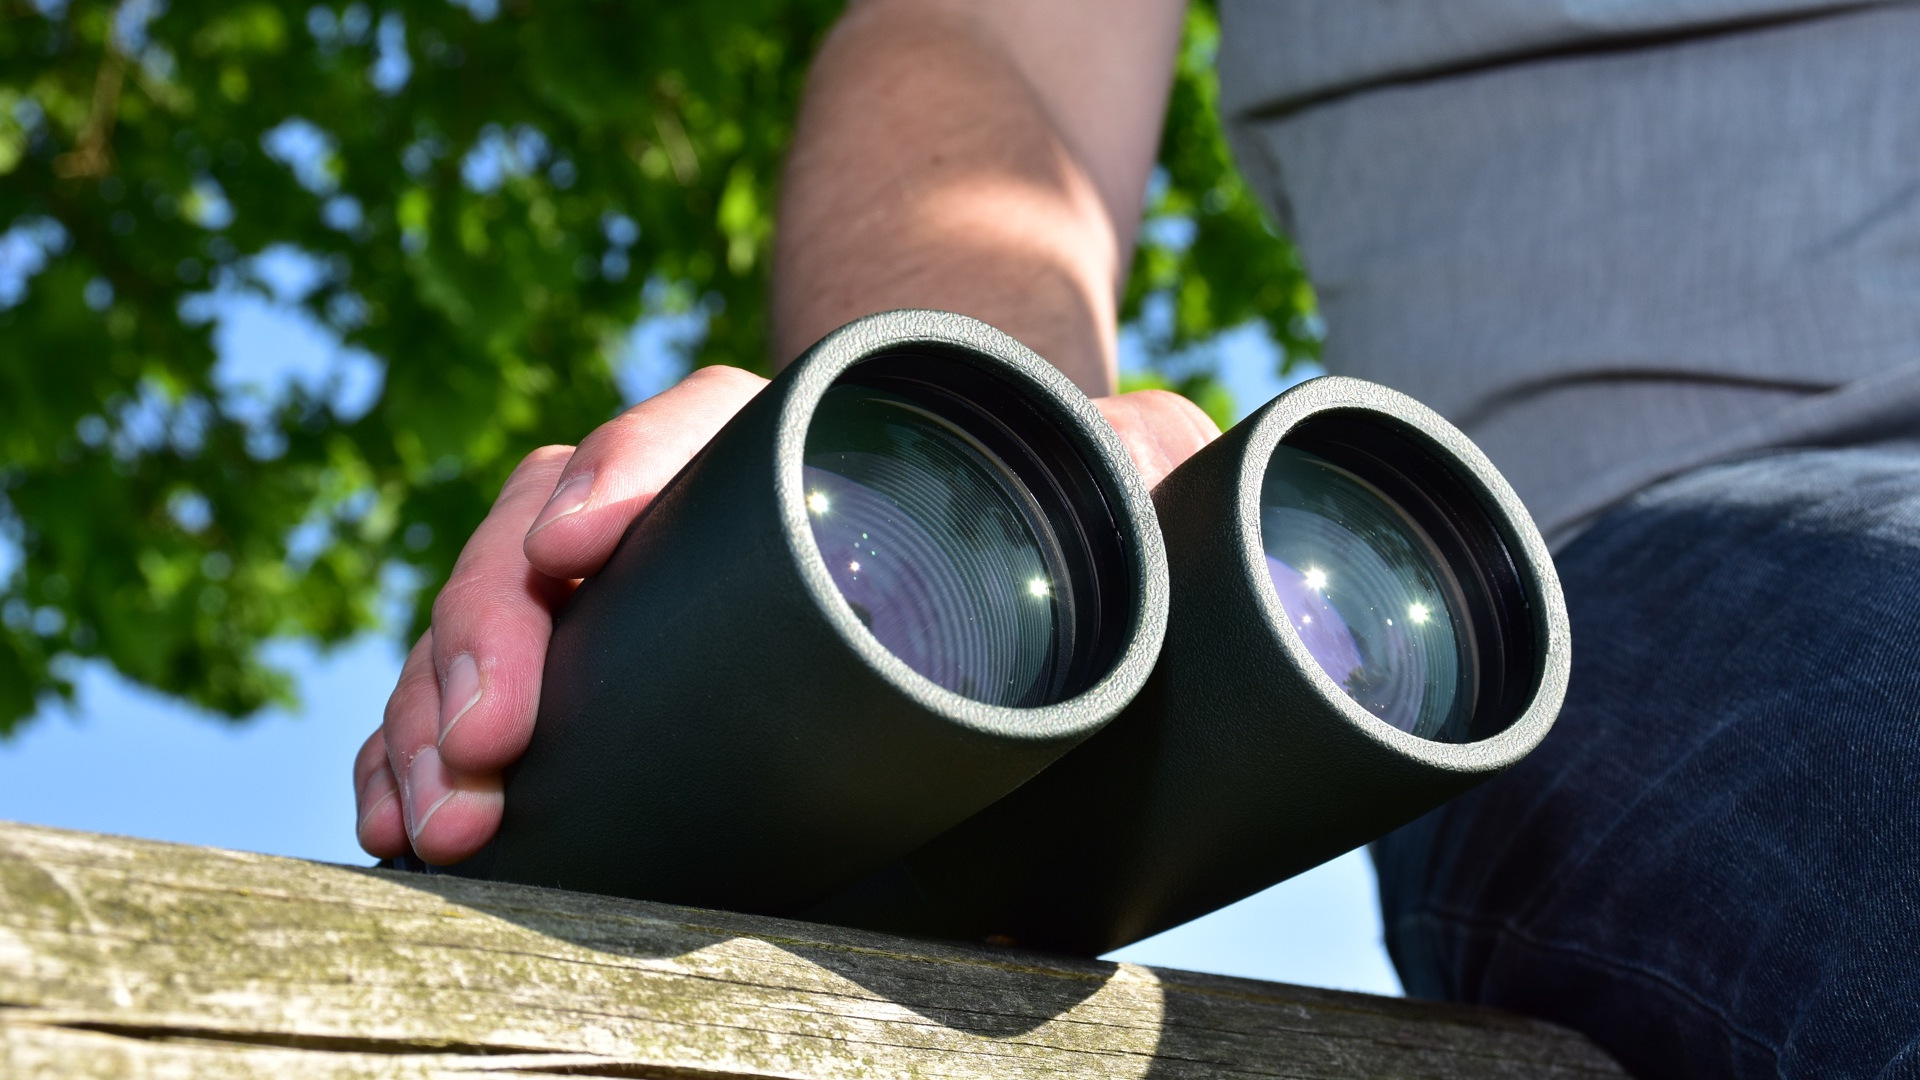 Buying and using binoculars